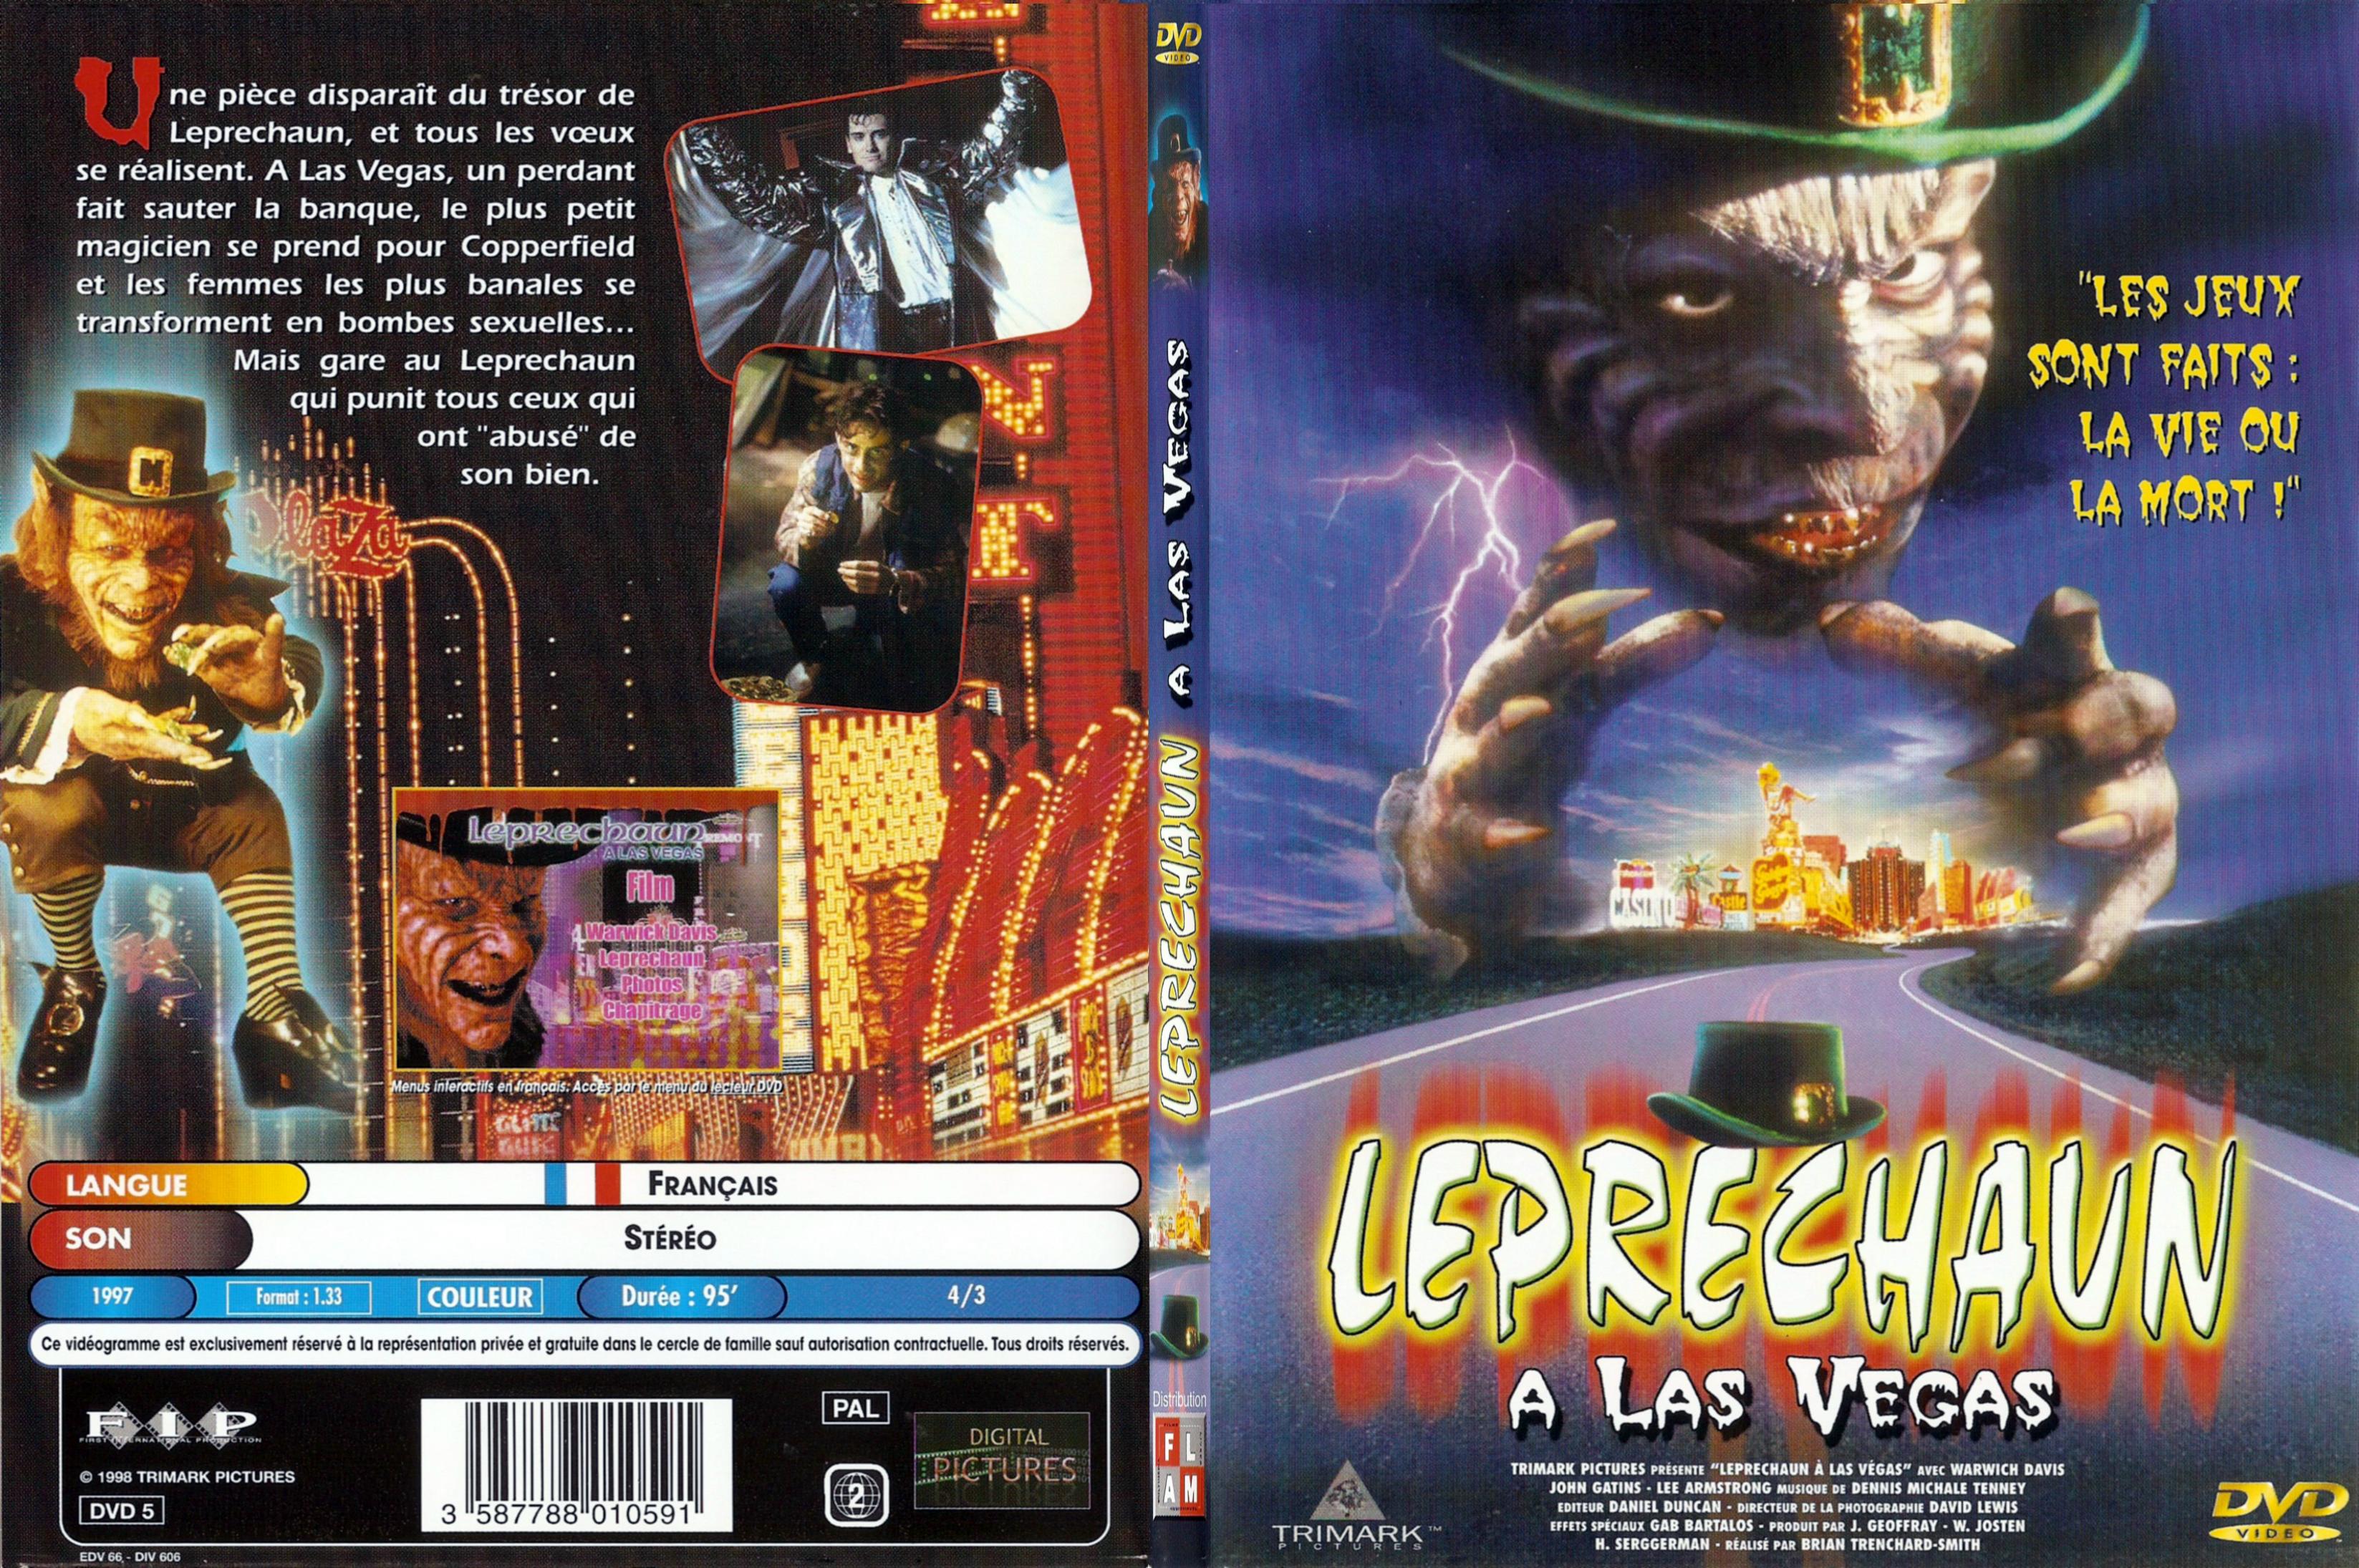 Jaquette DVD Leprechaun  Las Vegas - SLIM